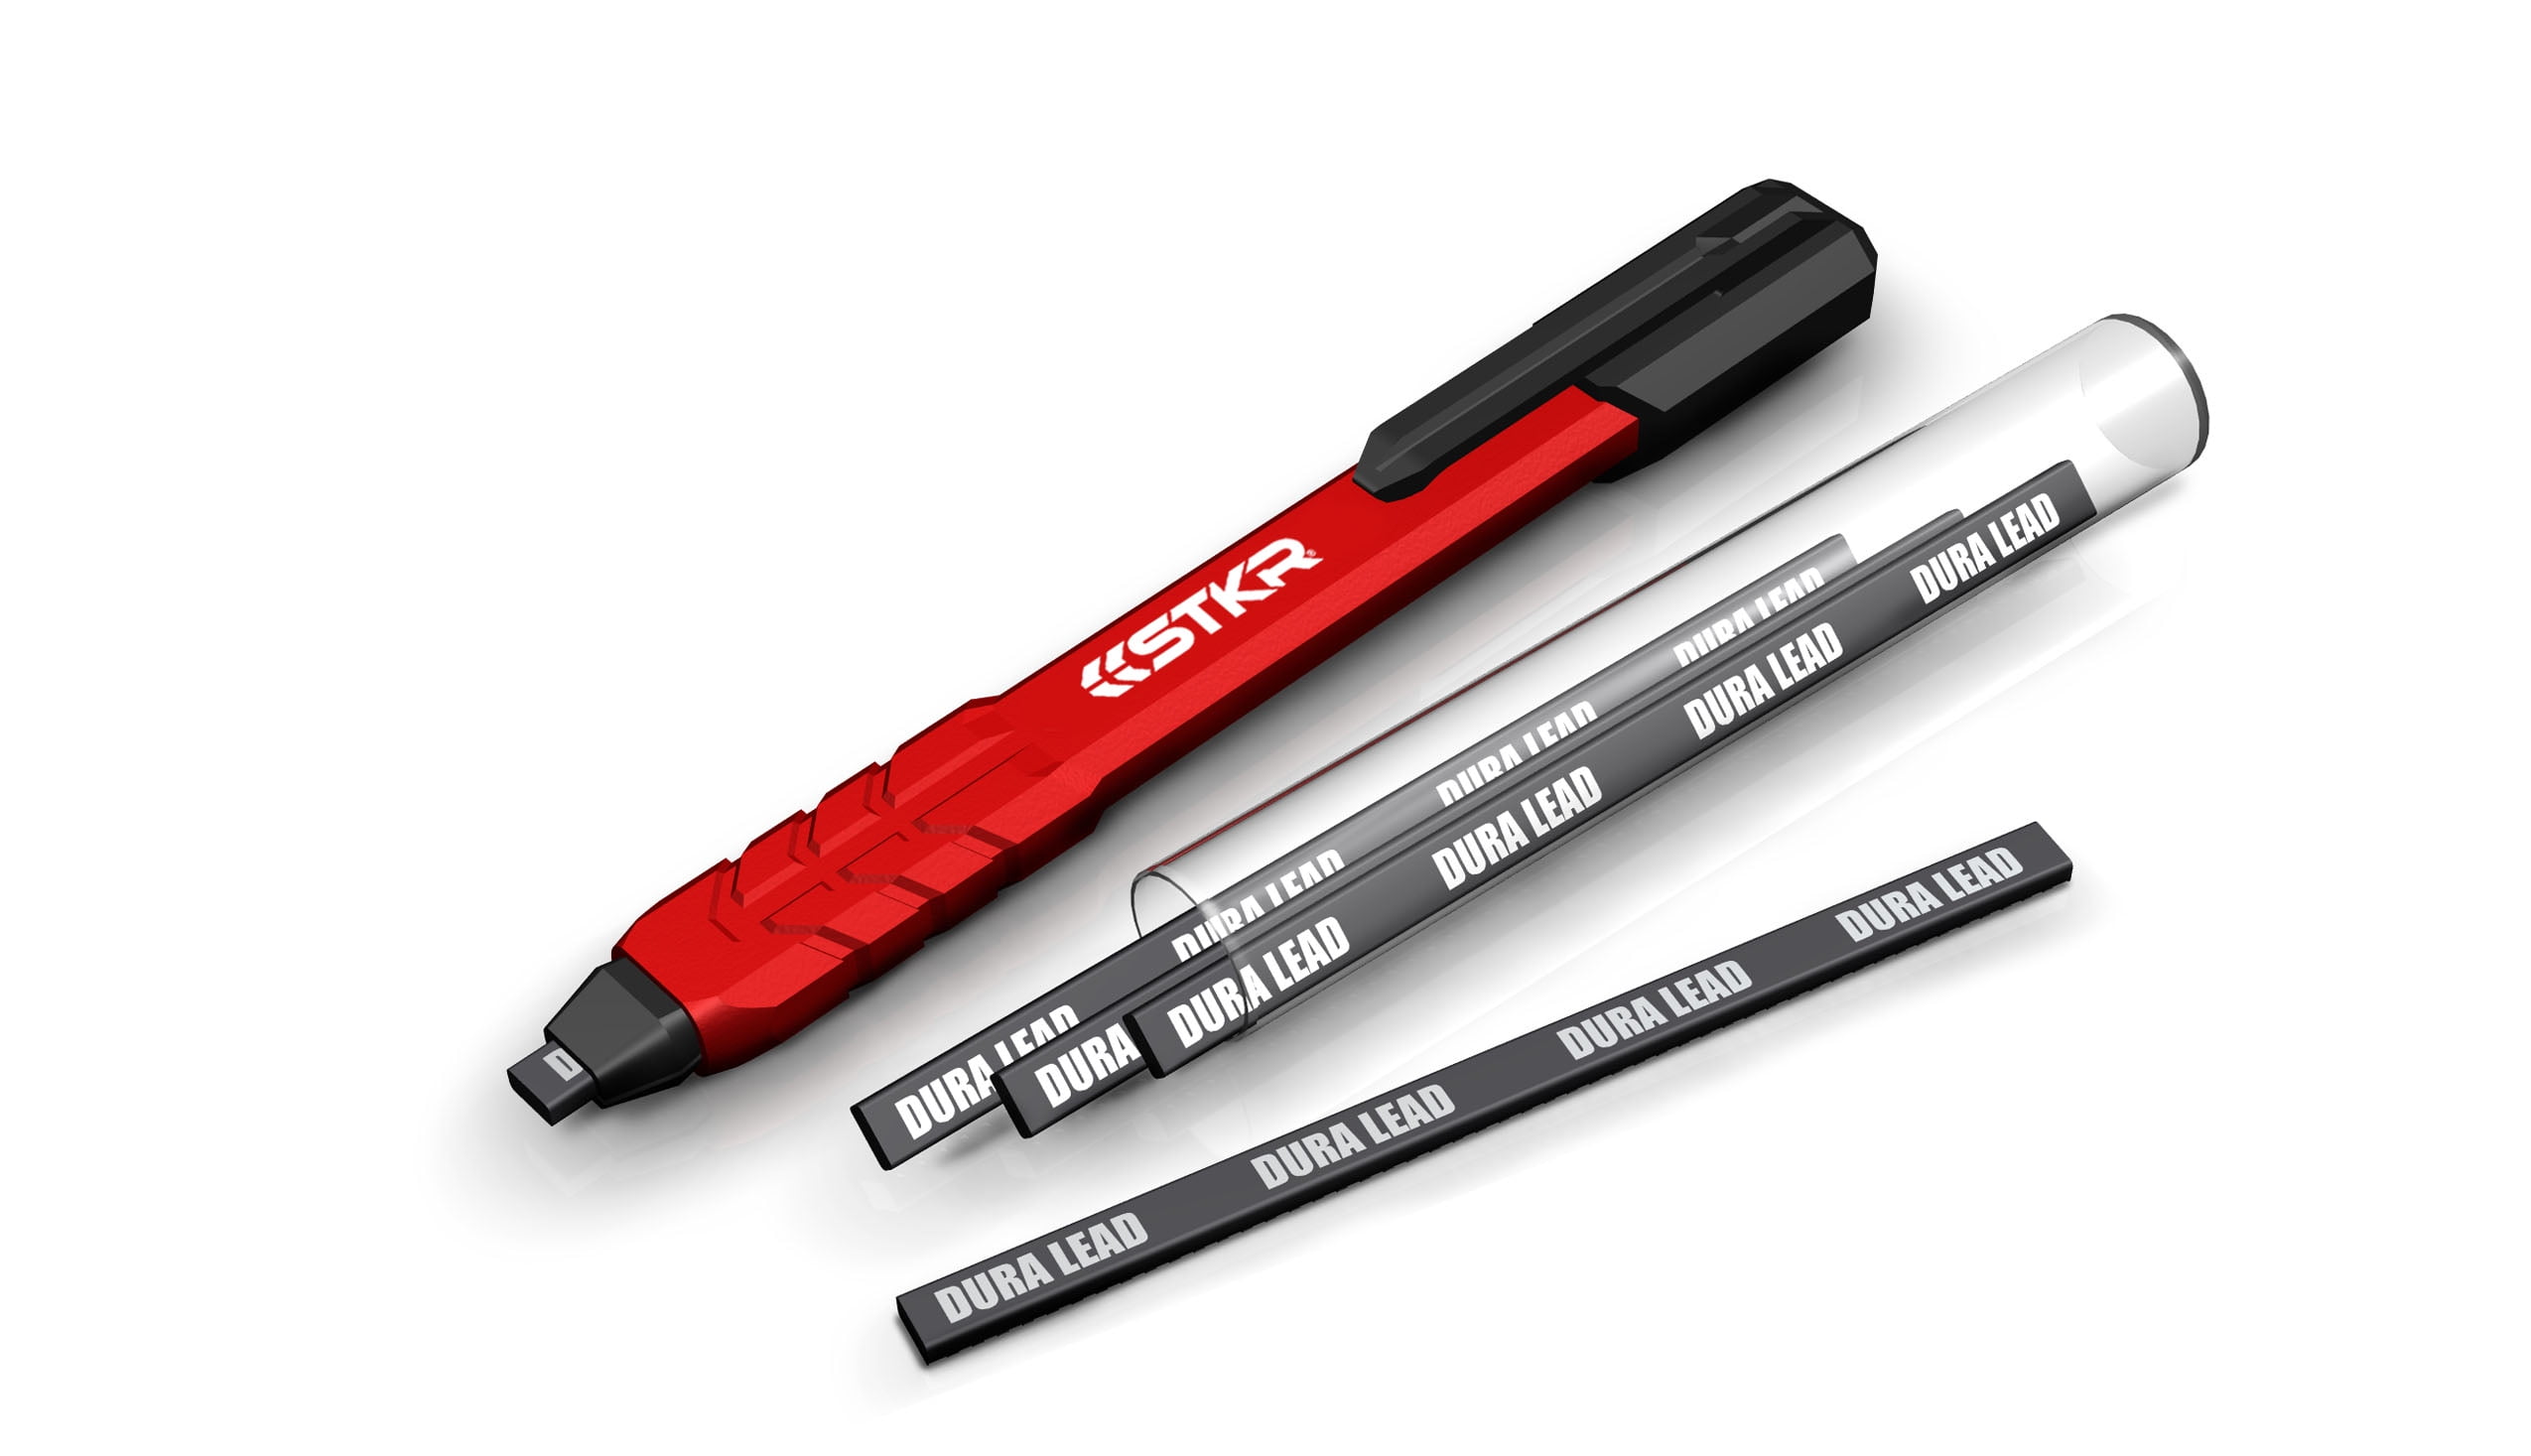 Carpenter Pencils: The Most Comprehensive Guide